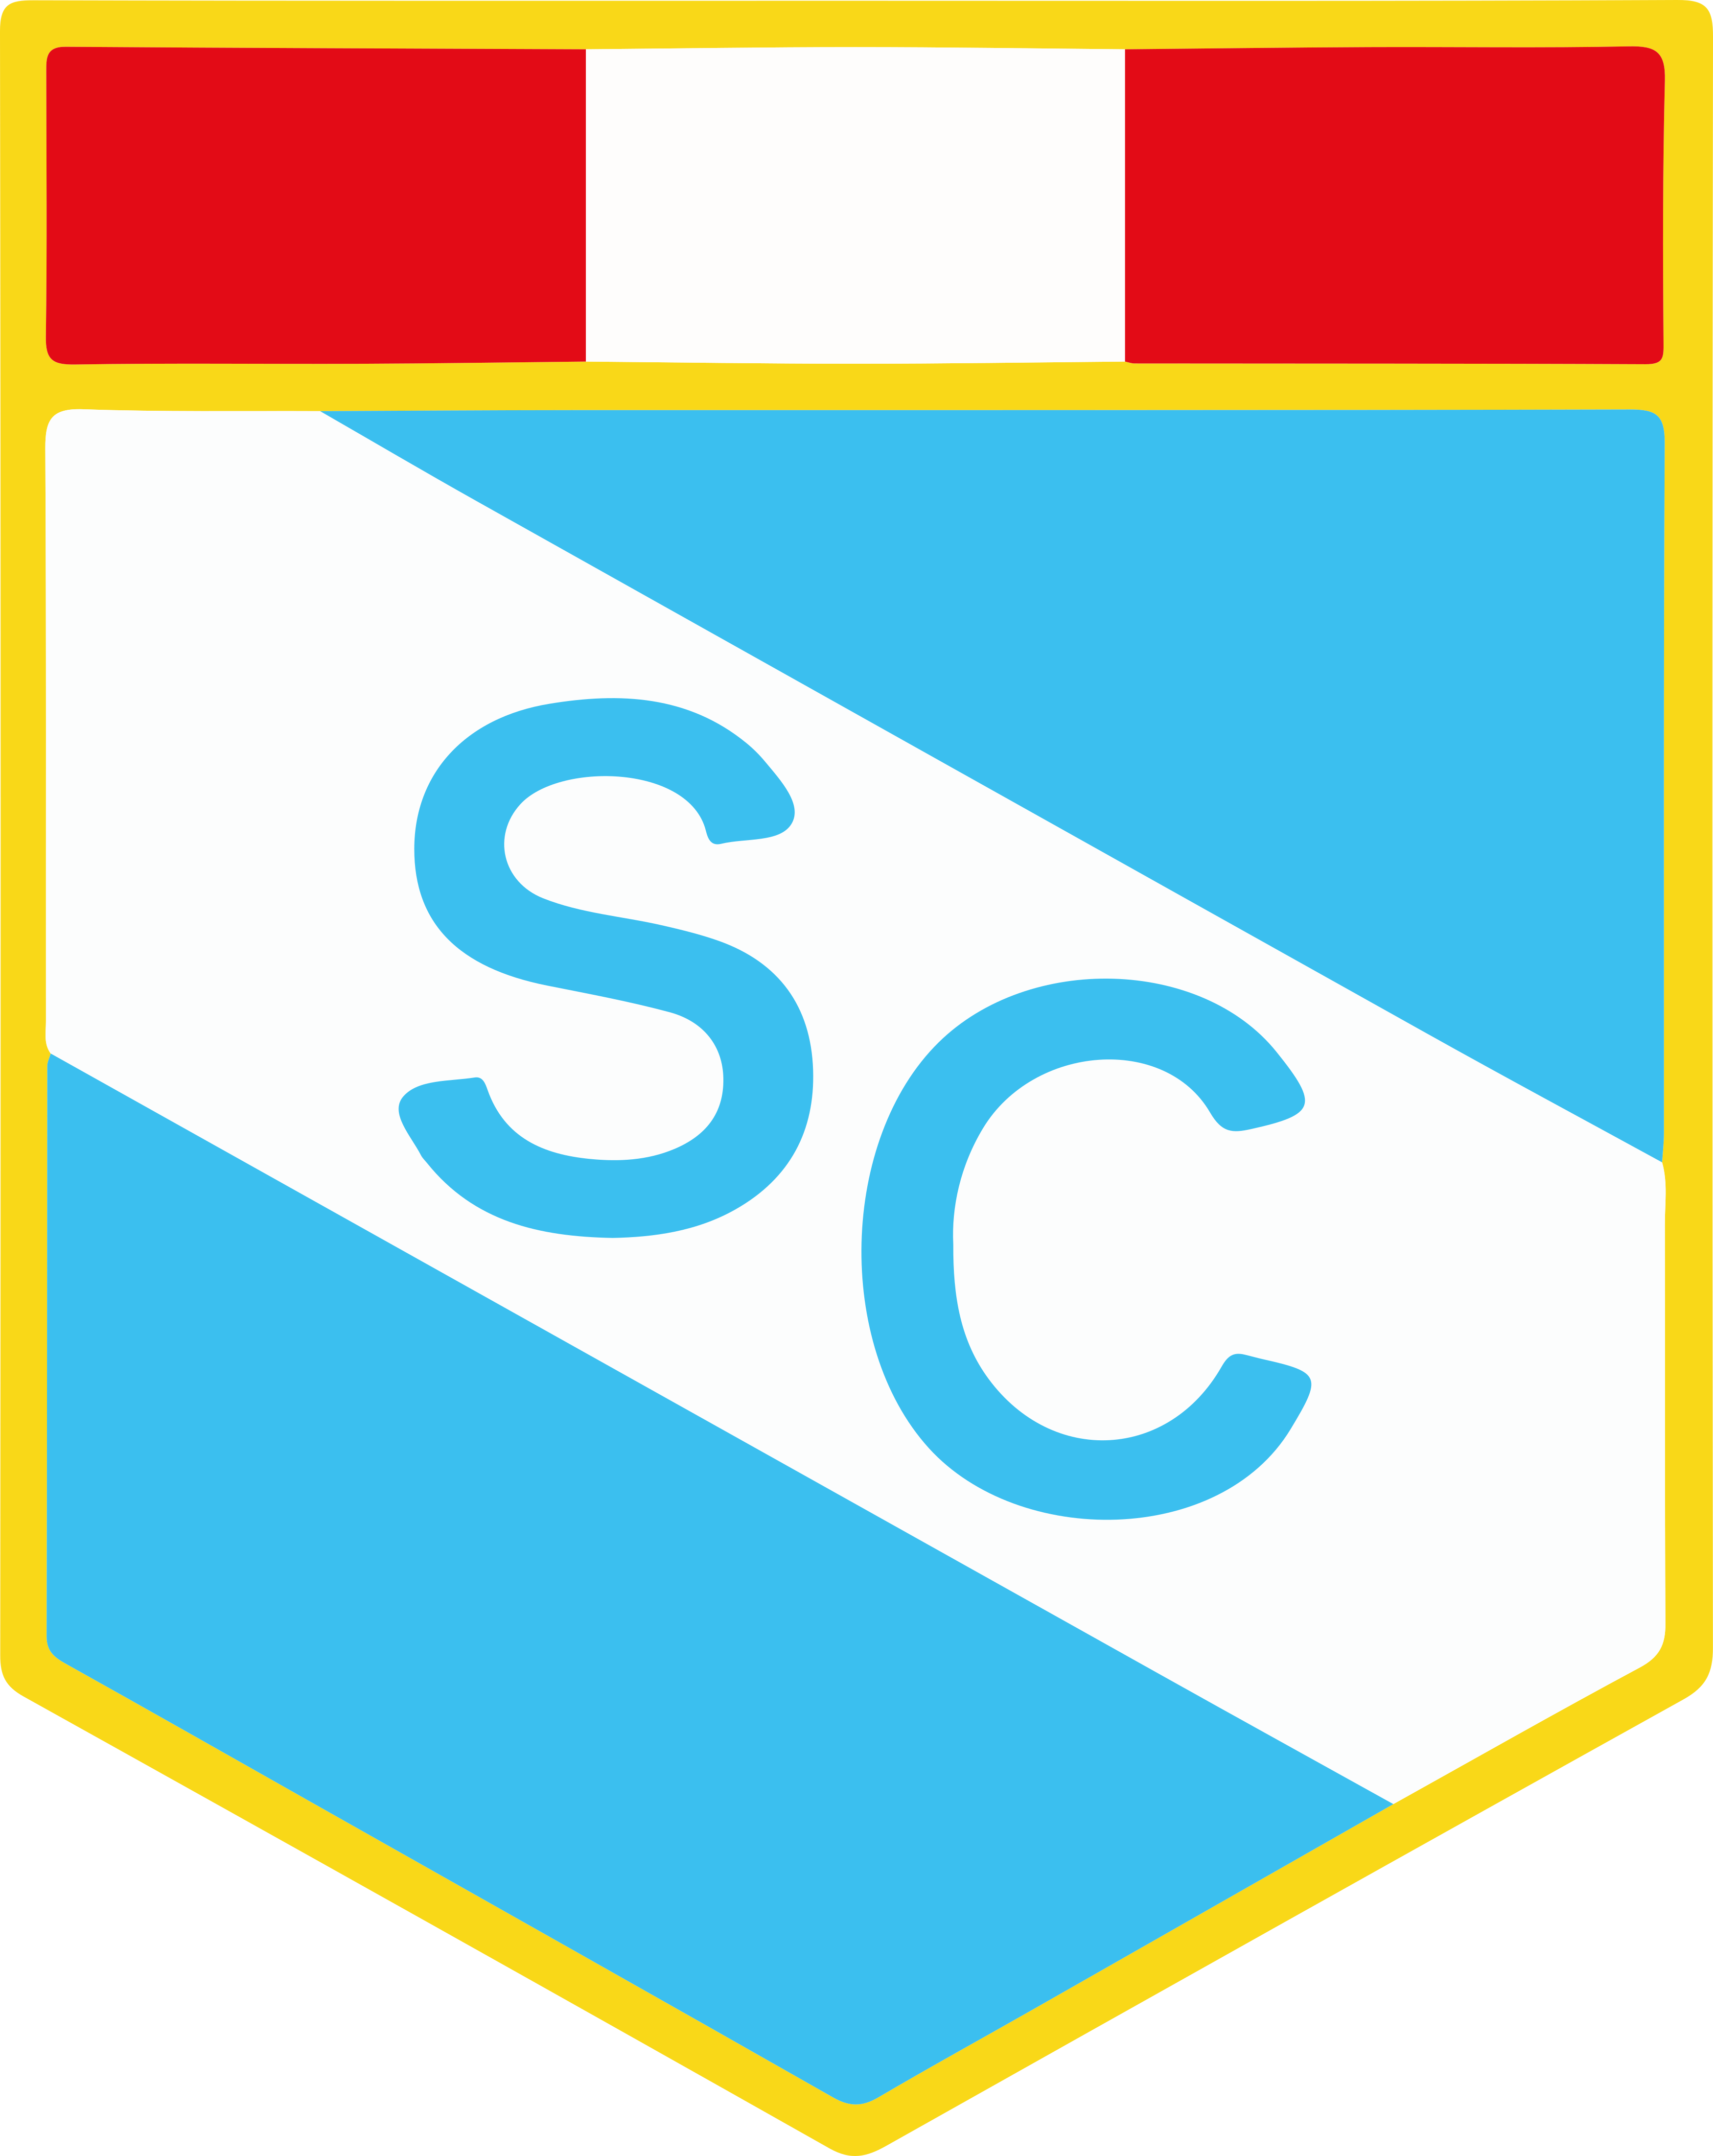 Sporting Cristal logo, escudo.